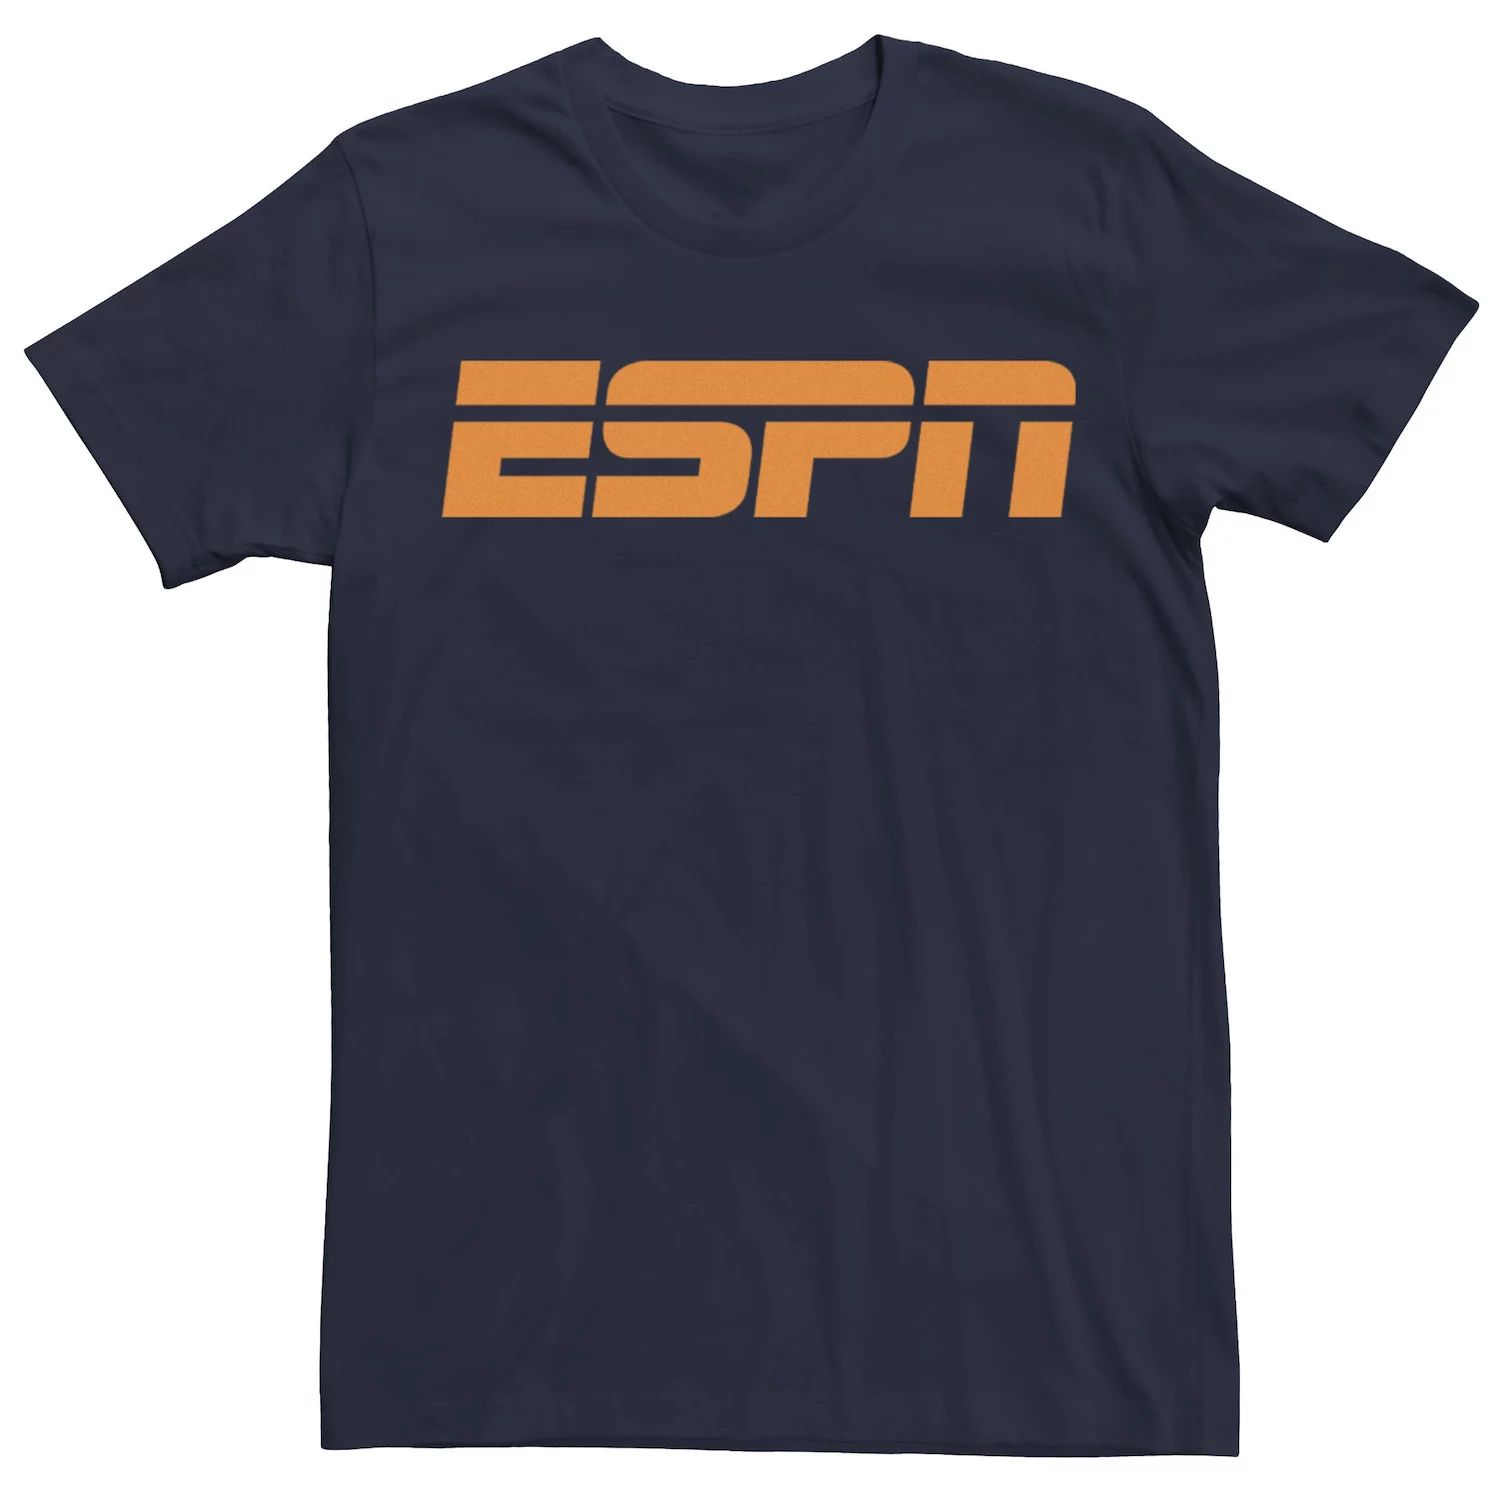 Мужская оранжевая футболка с текстовым логотипом ESPN Licensed Character